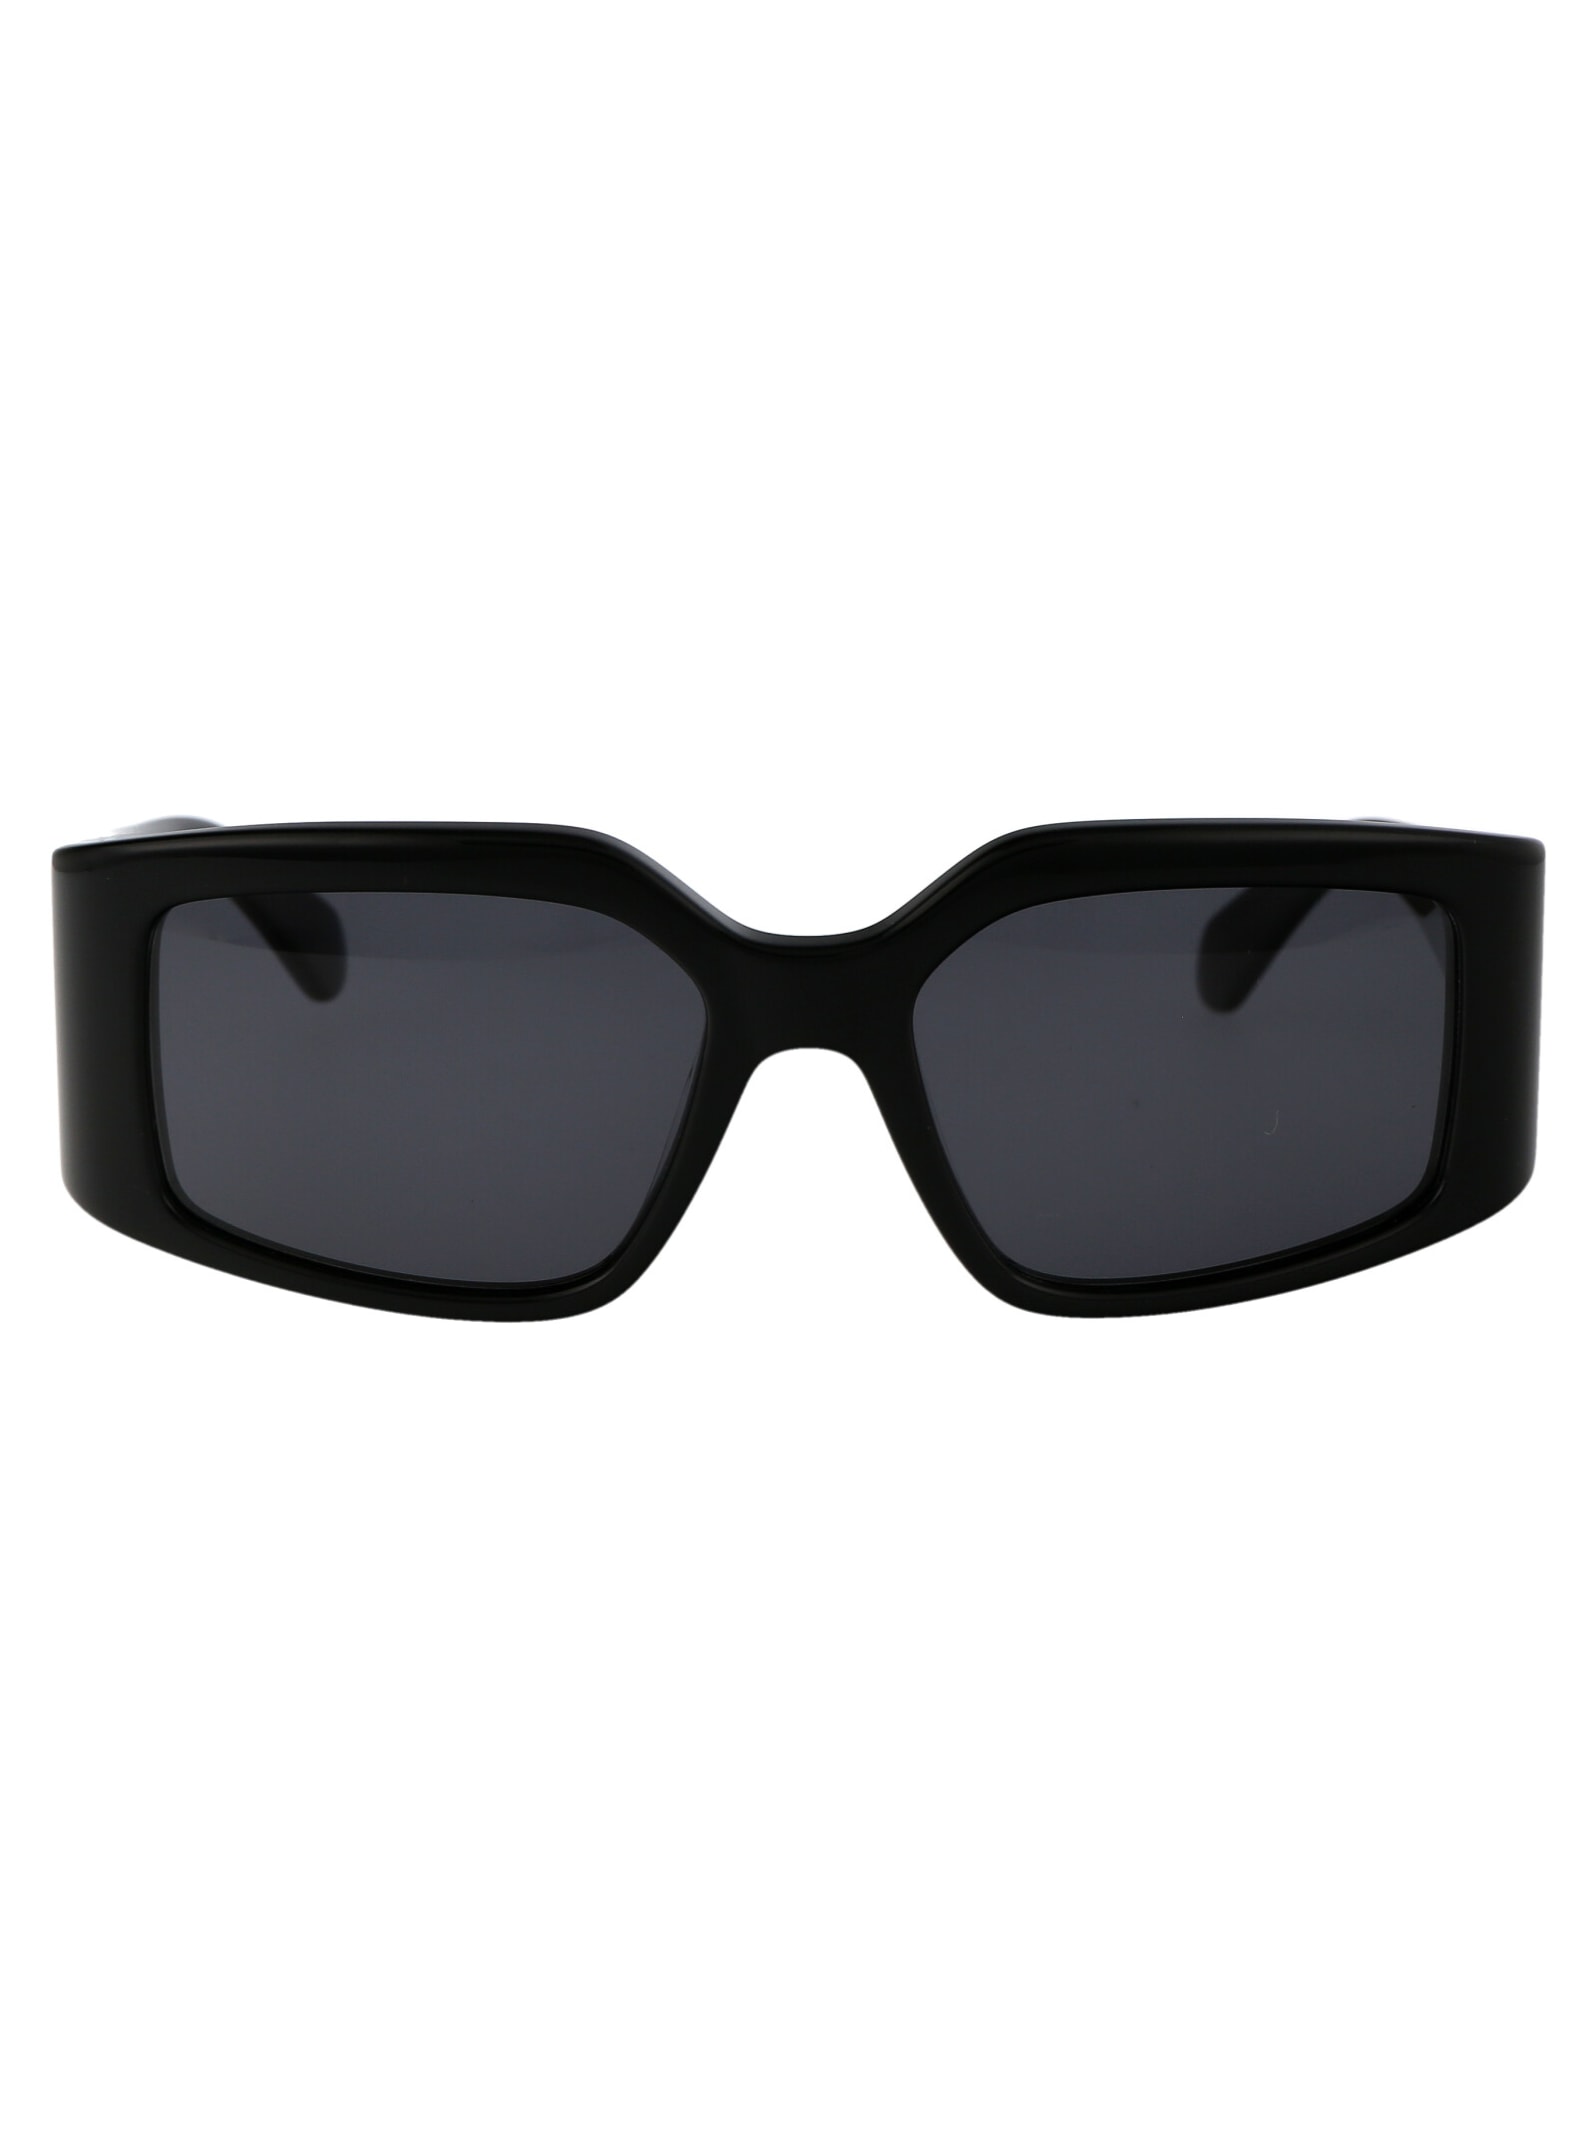 Sf1101s Sunglasses